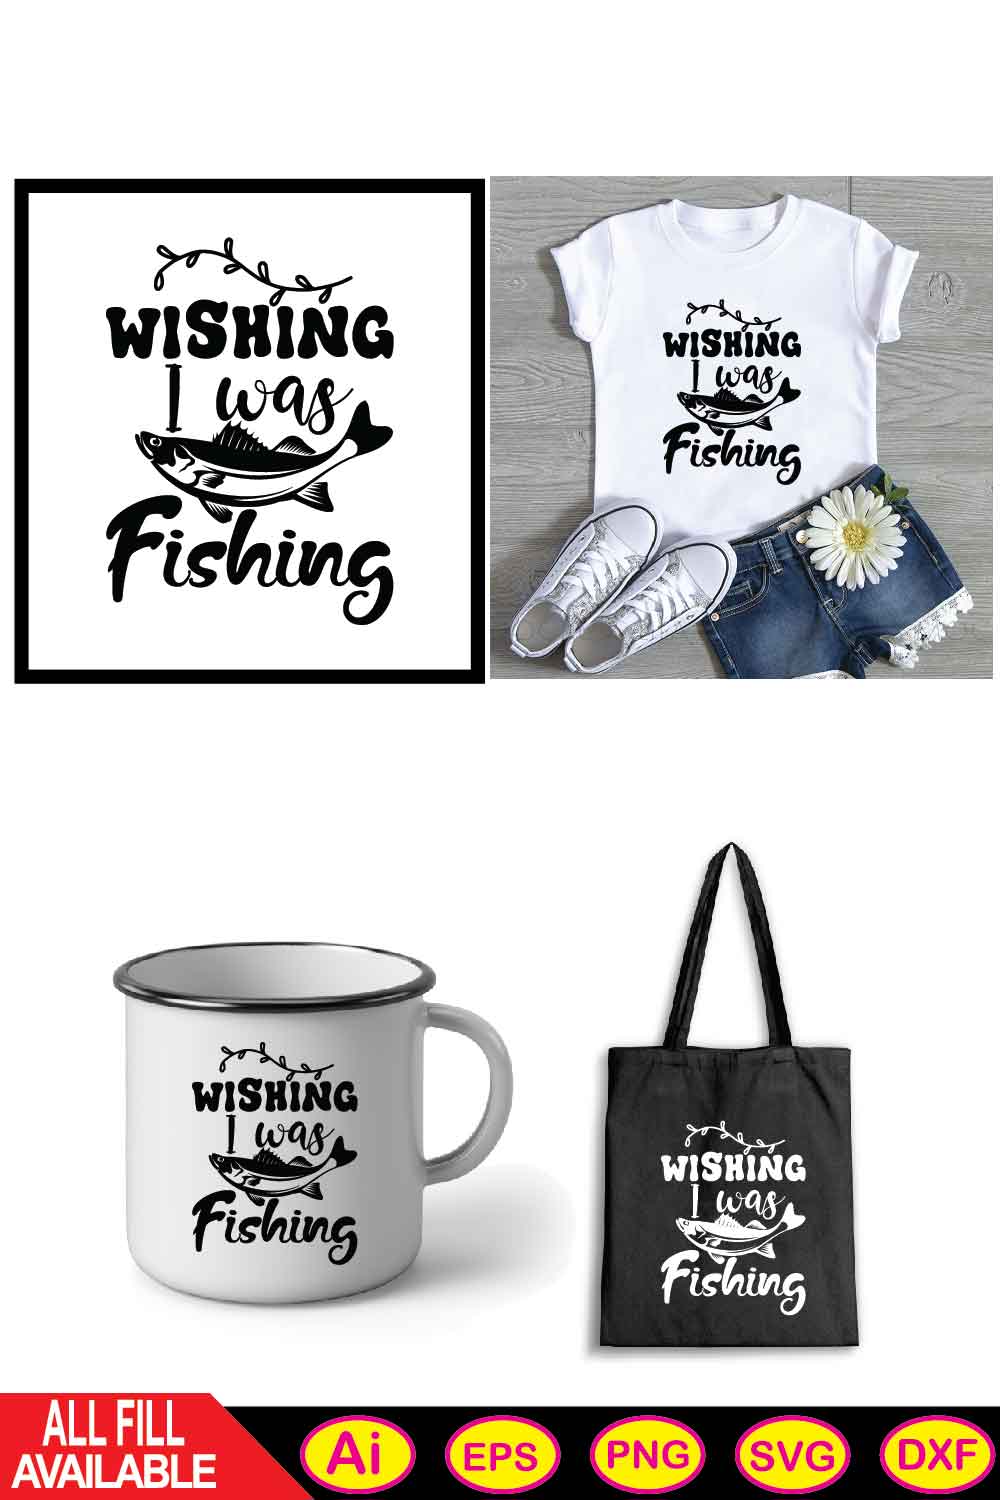 Wishing I was fishing t-shirt pinterest preview image.